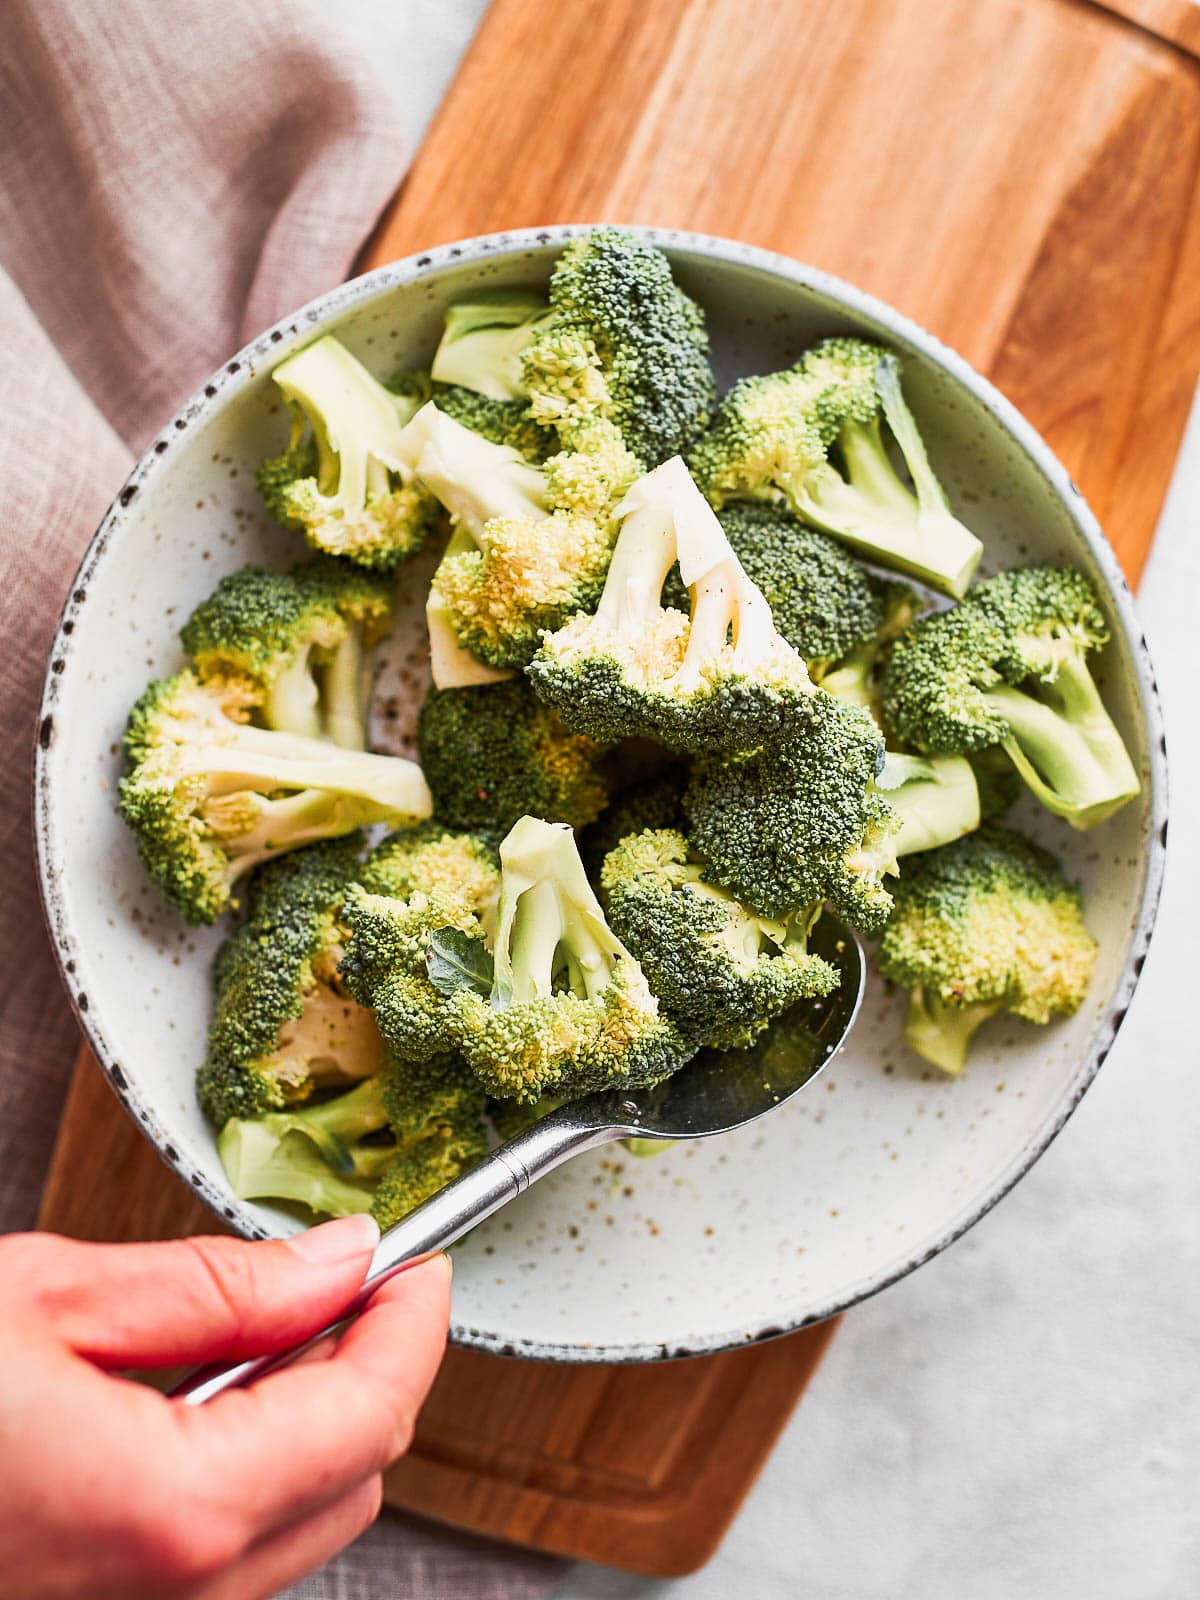 Mixing sesame oil through broccoli